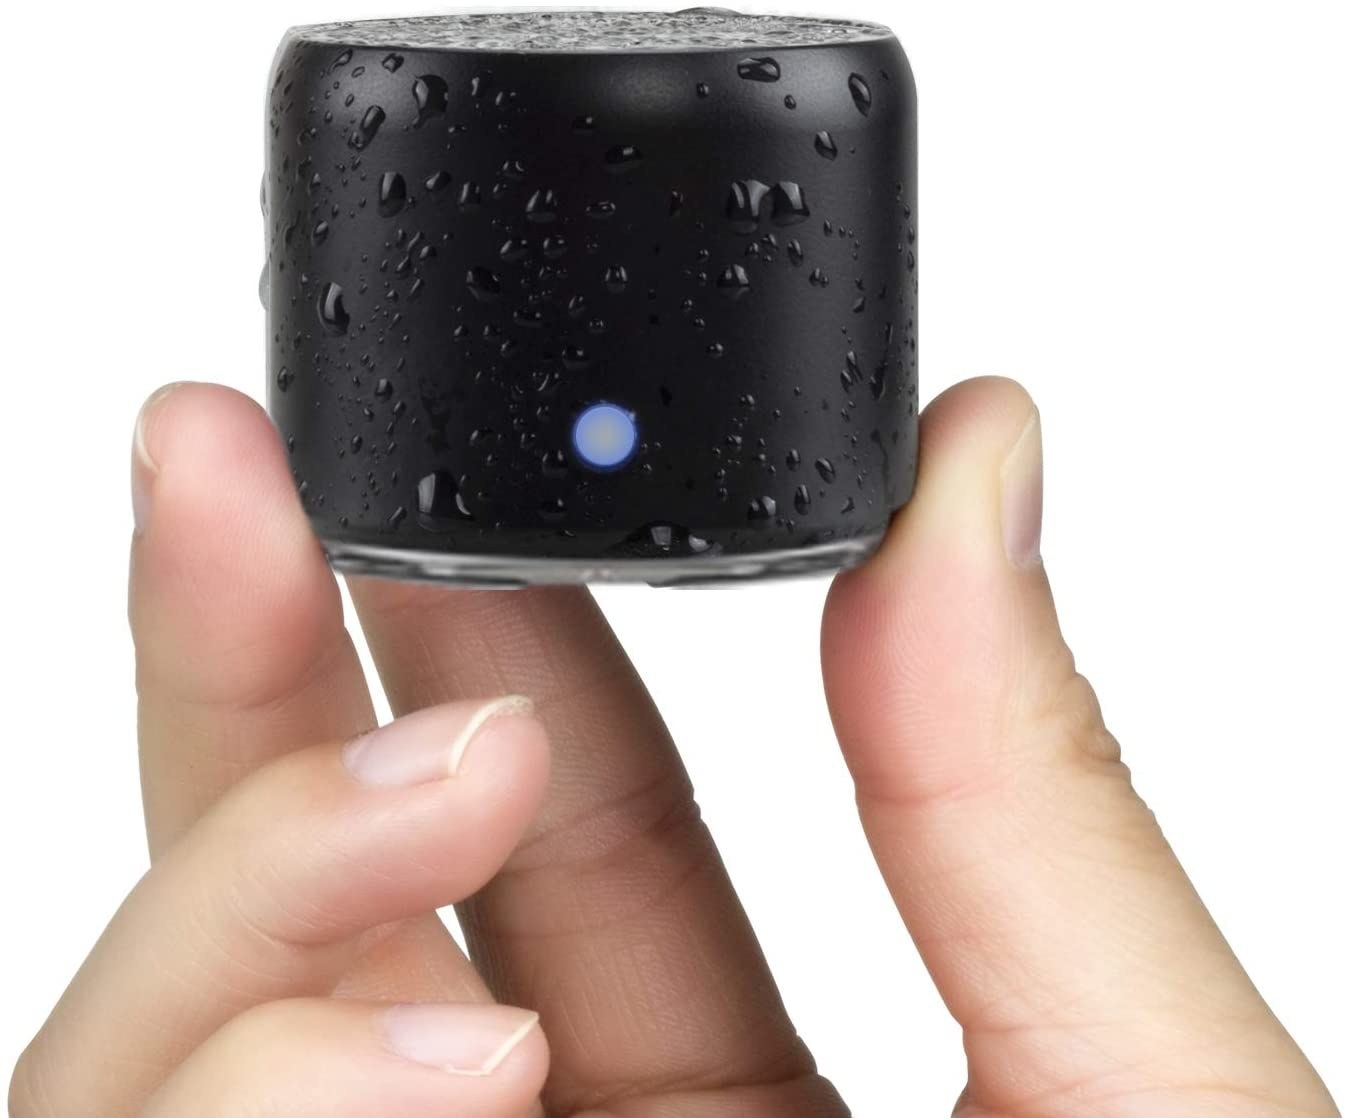 A little Bluetooth speaker being held between two fingers